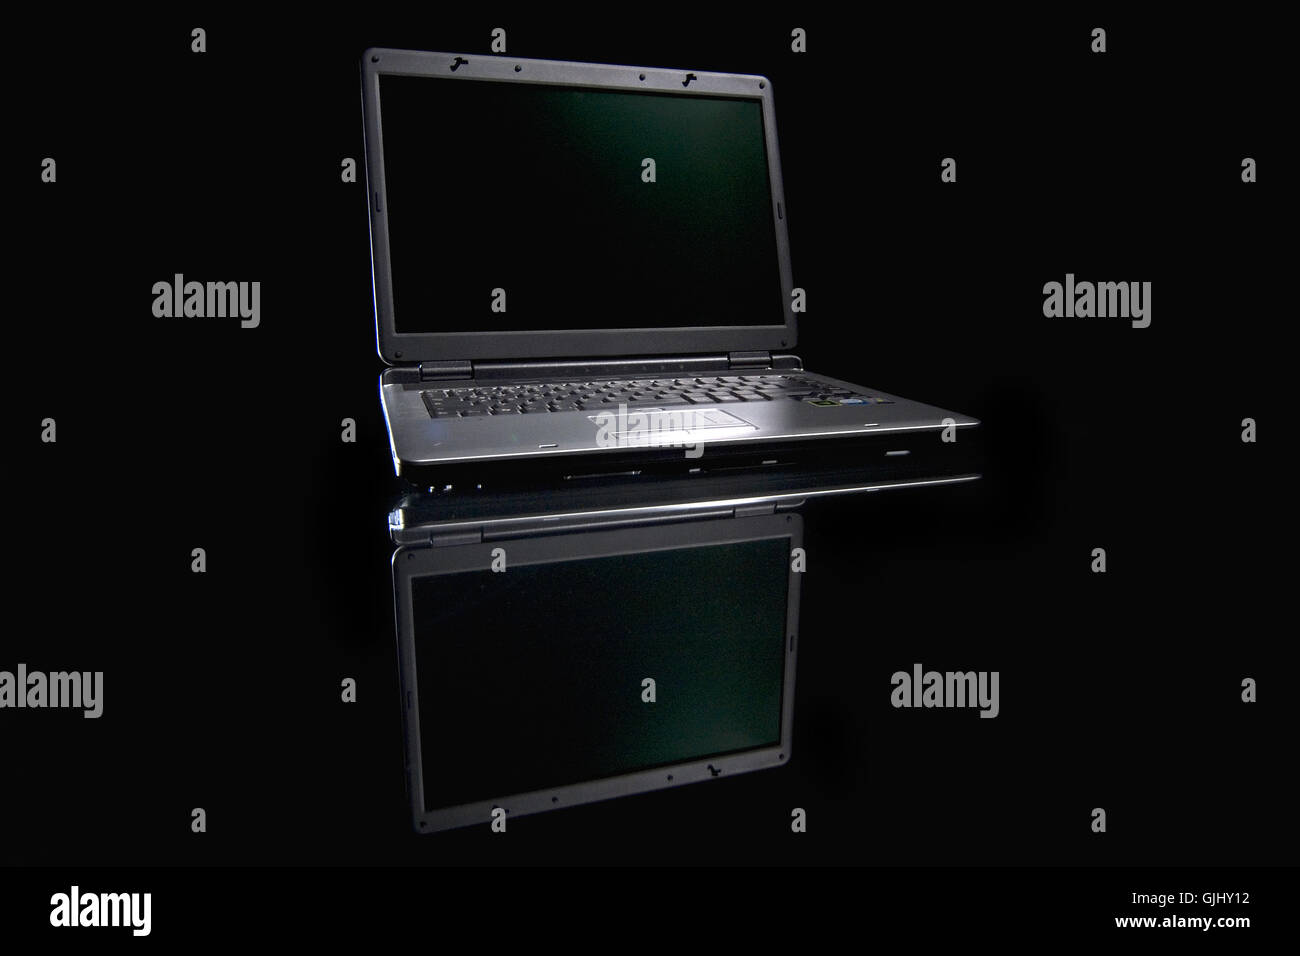 laptop notebook computers Stock Photo - Alamy